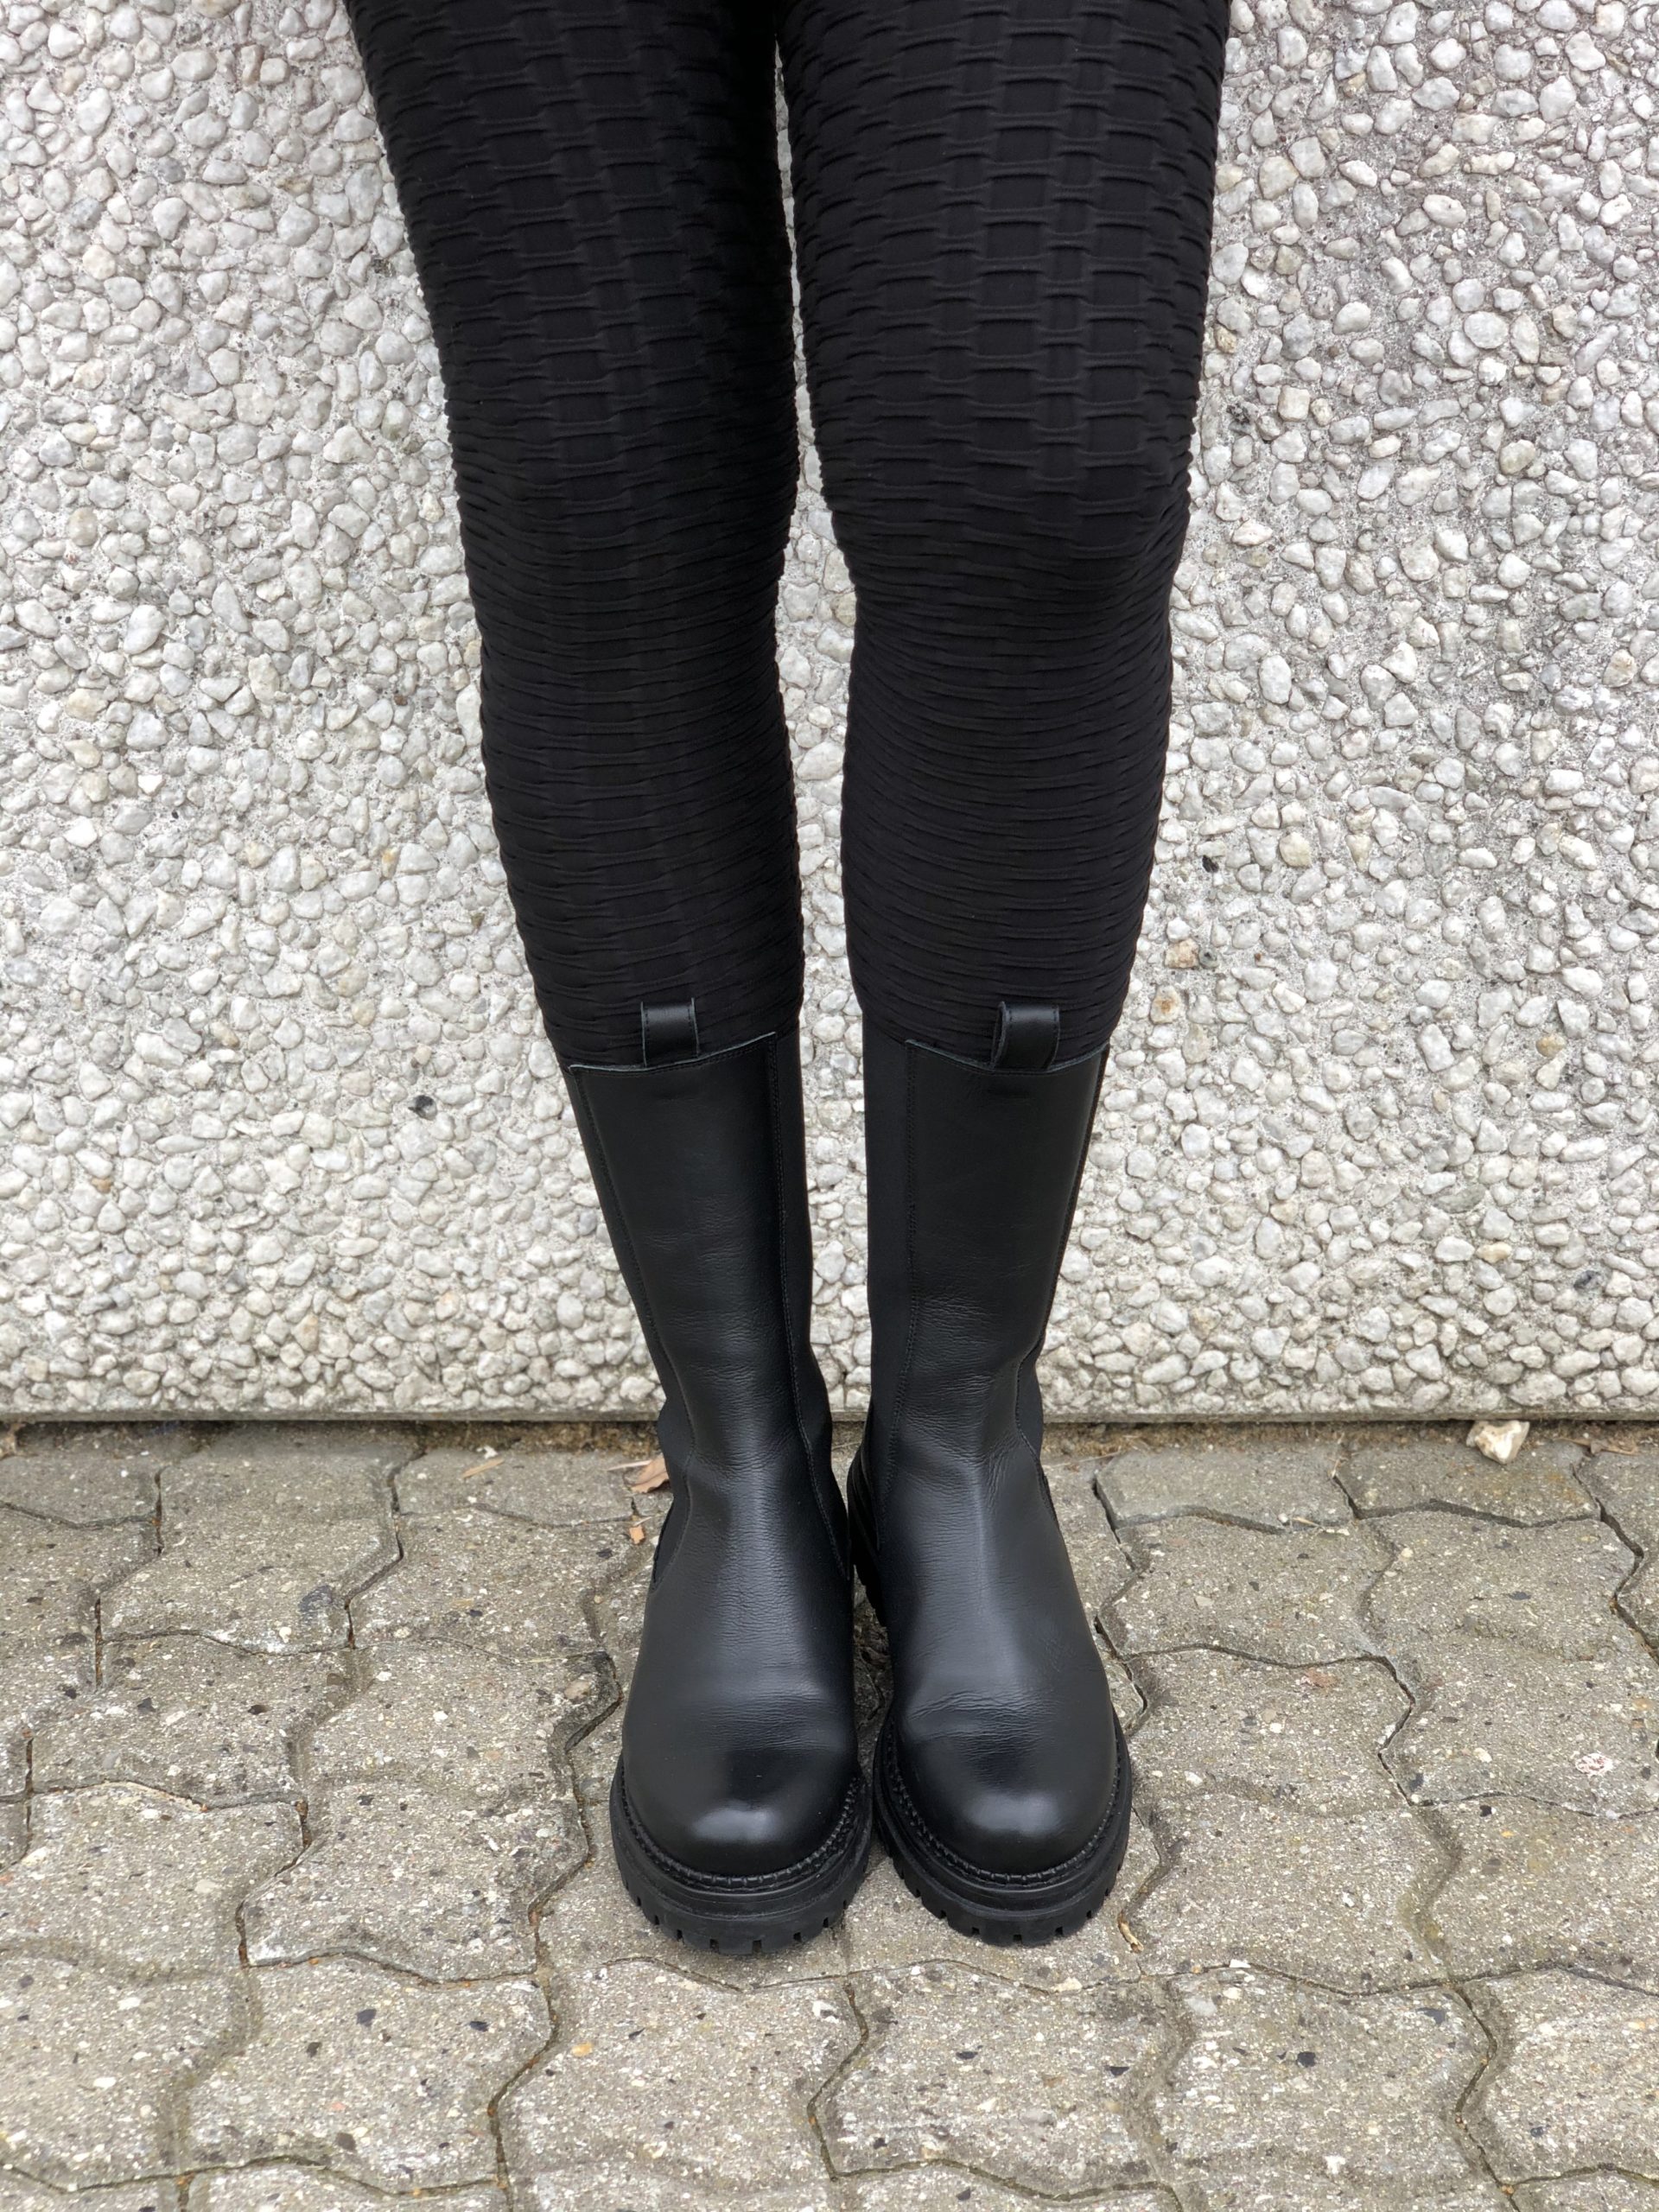 Black Leggings boots